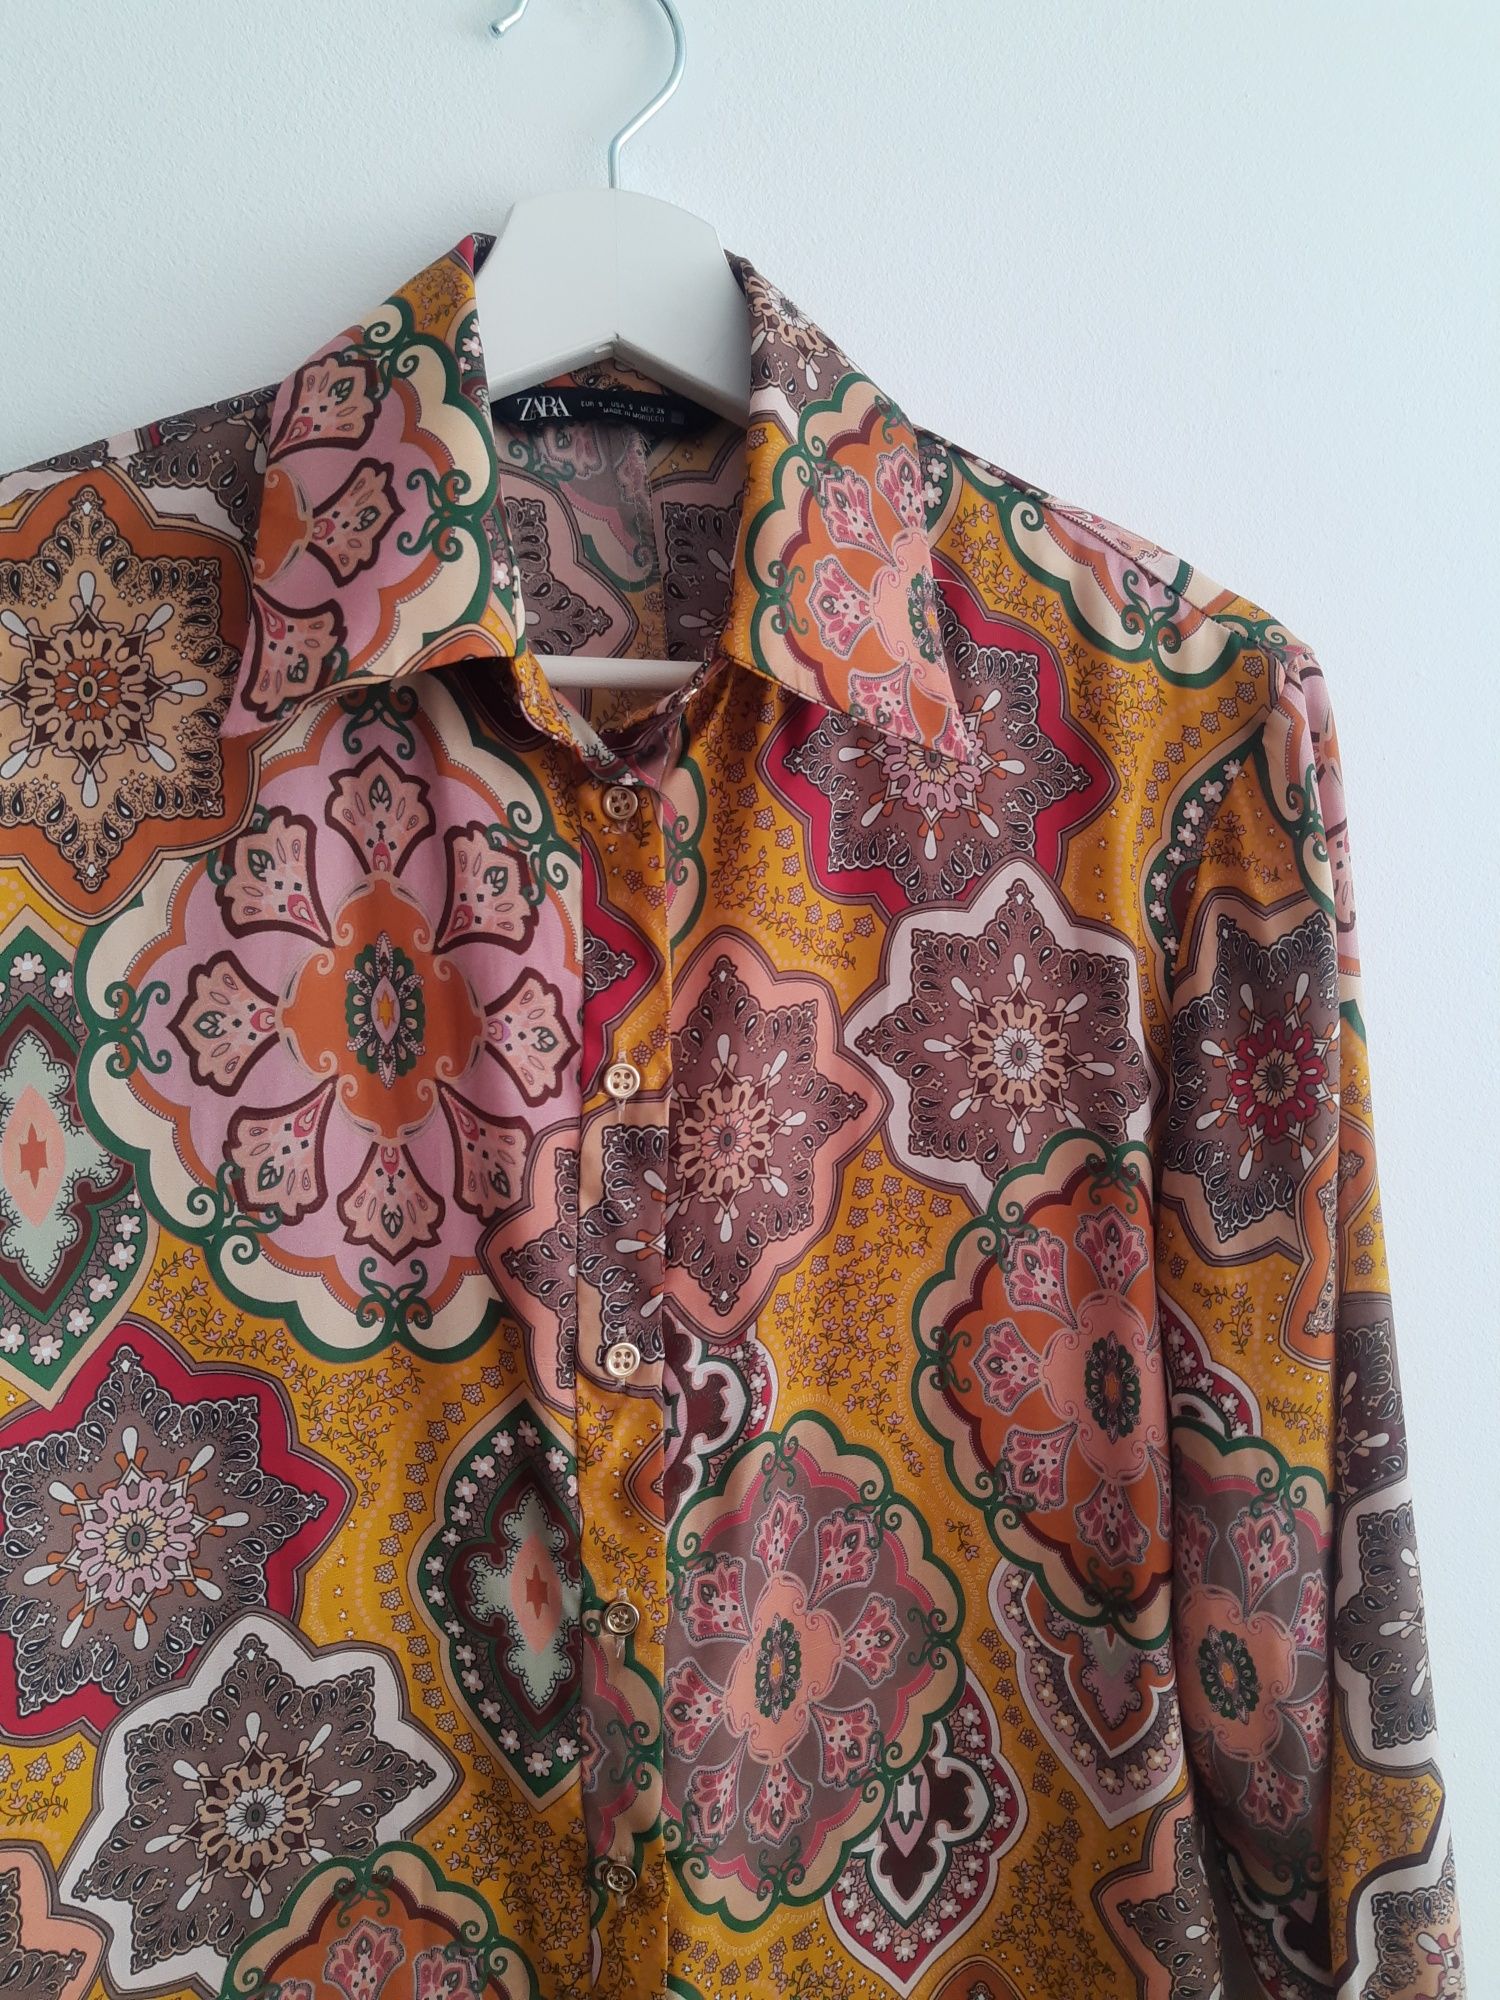 Koszula Zara boho hippie wzorye mandale